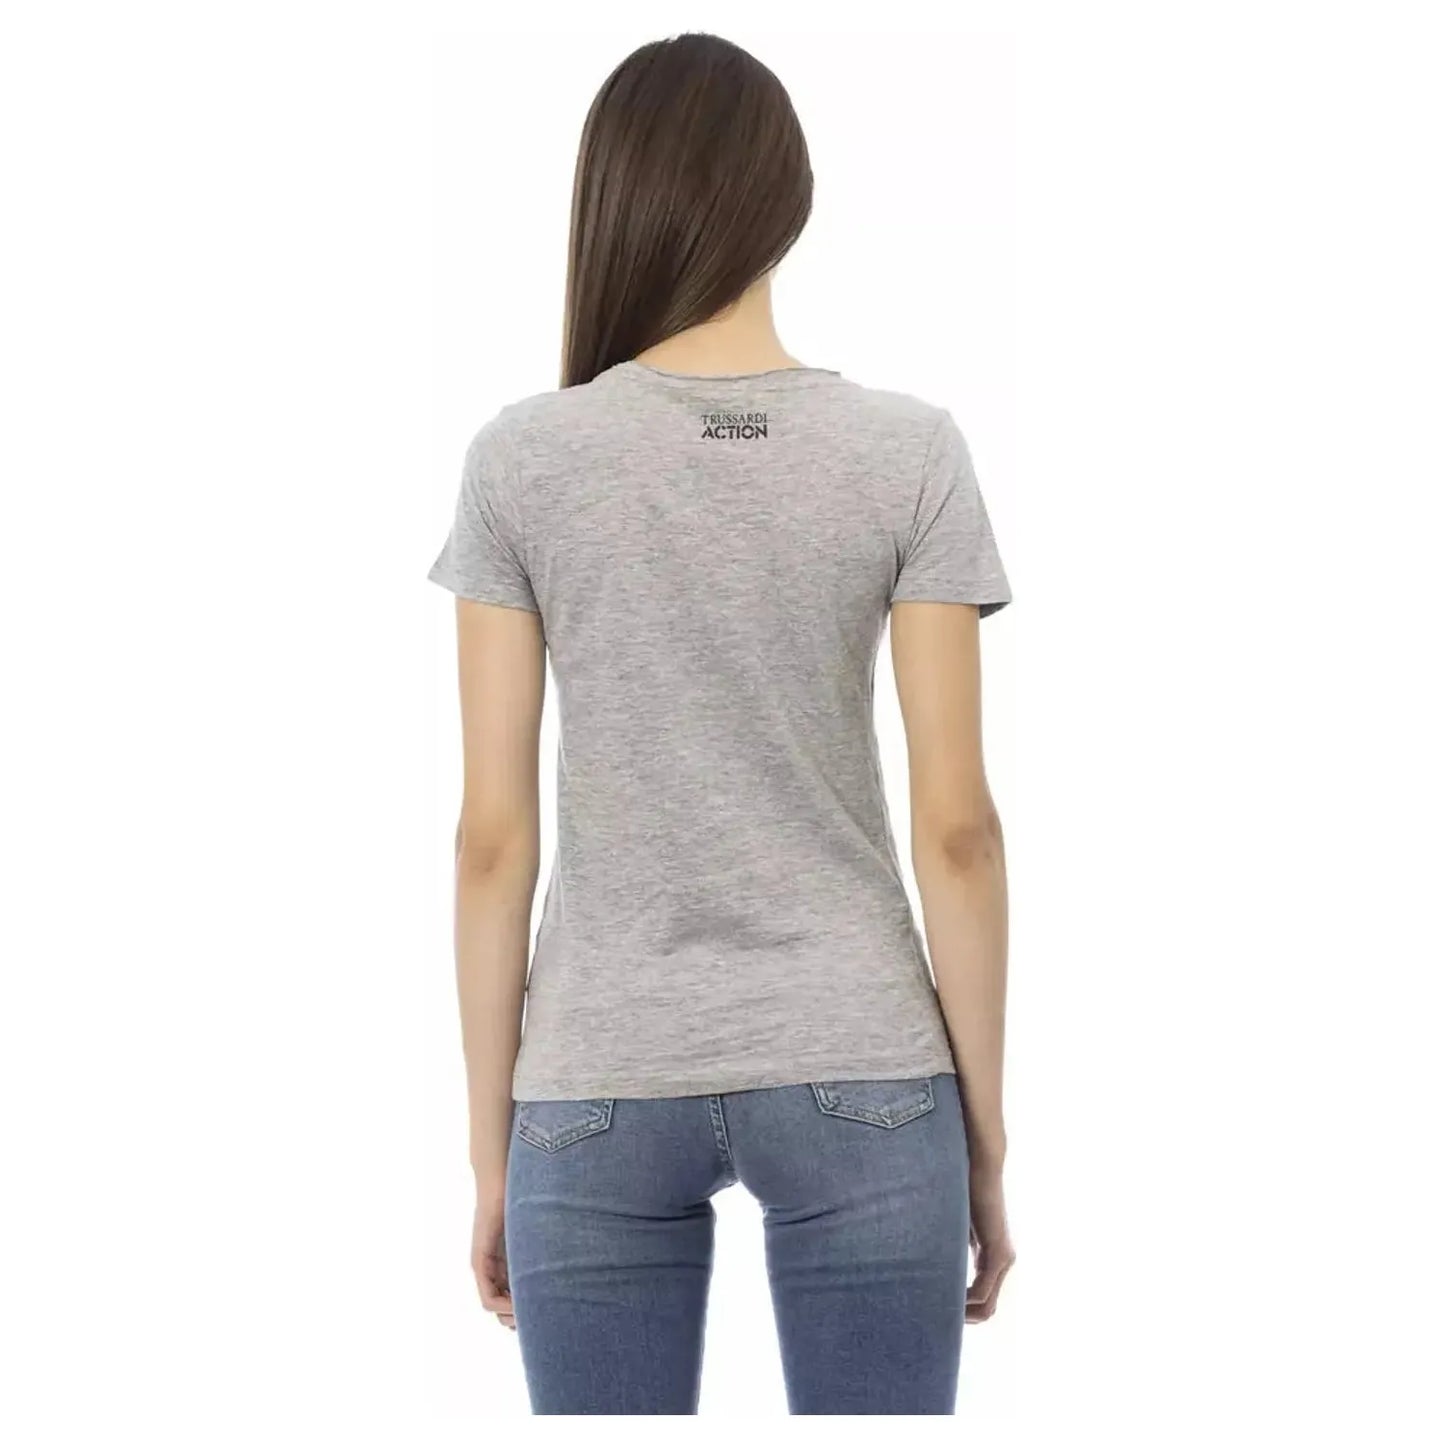 Trussardi Action Chic Gray Short Sleeve Round Neck T-Shirt gray-cotton-tops-t-shirt-18